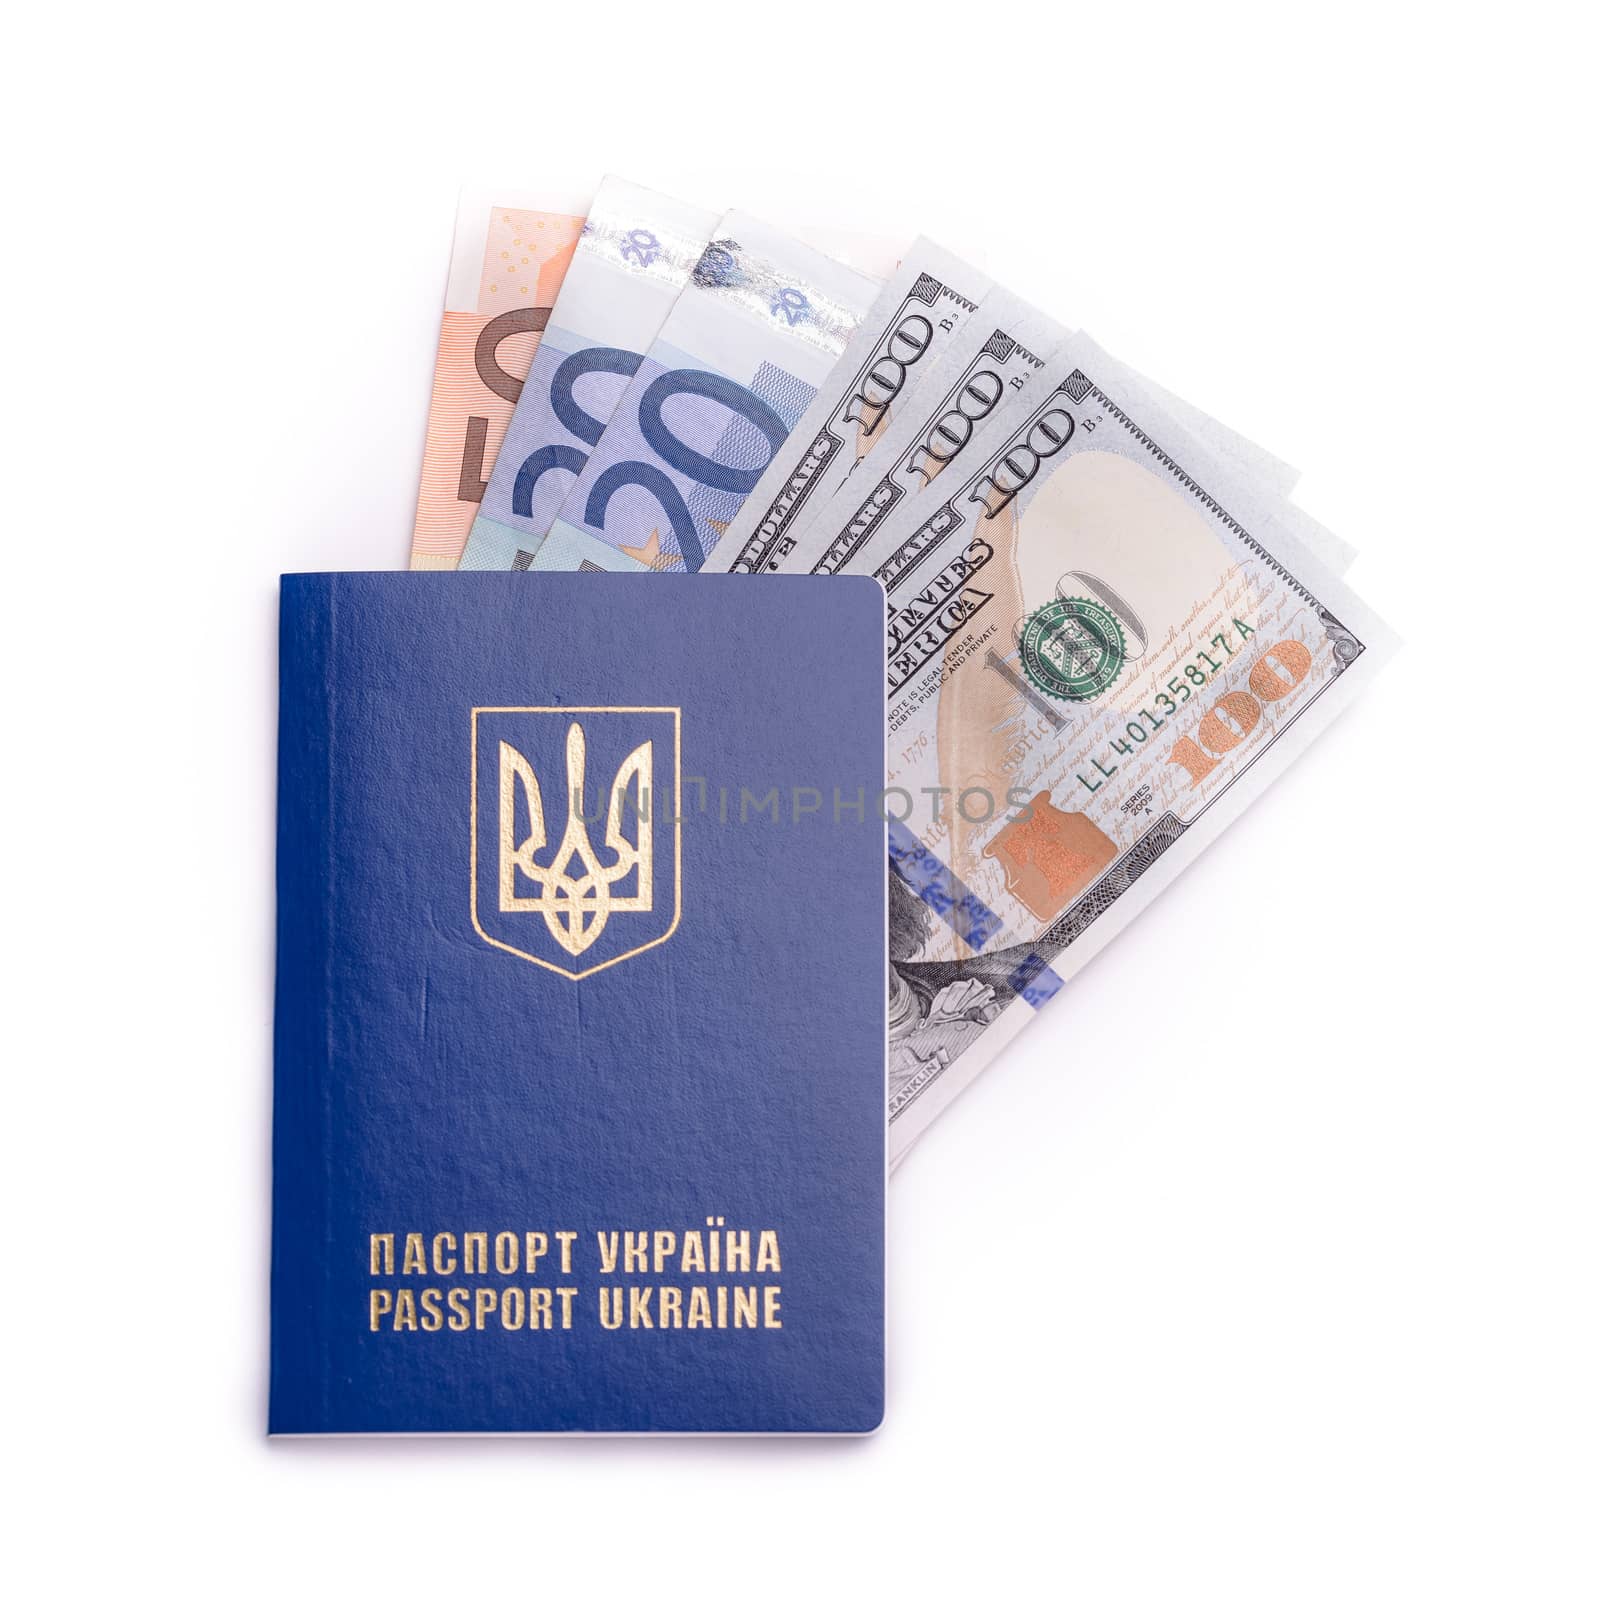 New blue Ukrainian International Passport with Dollars and Euros banknotes